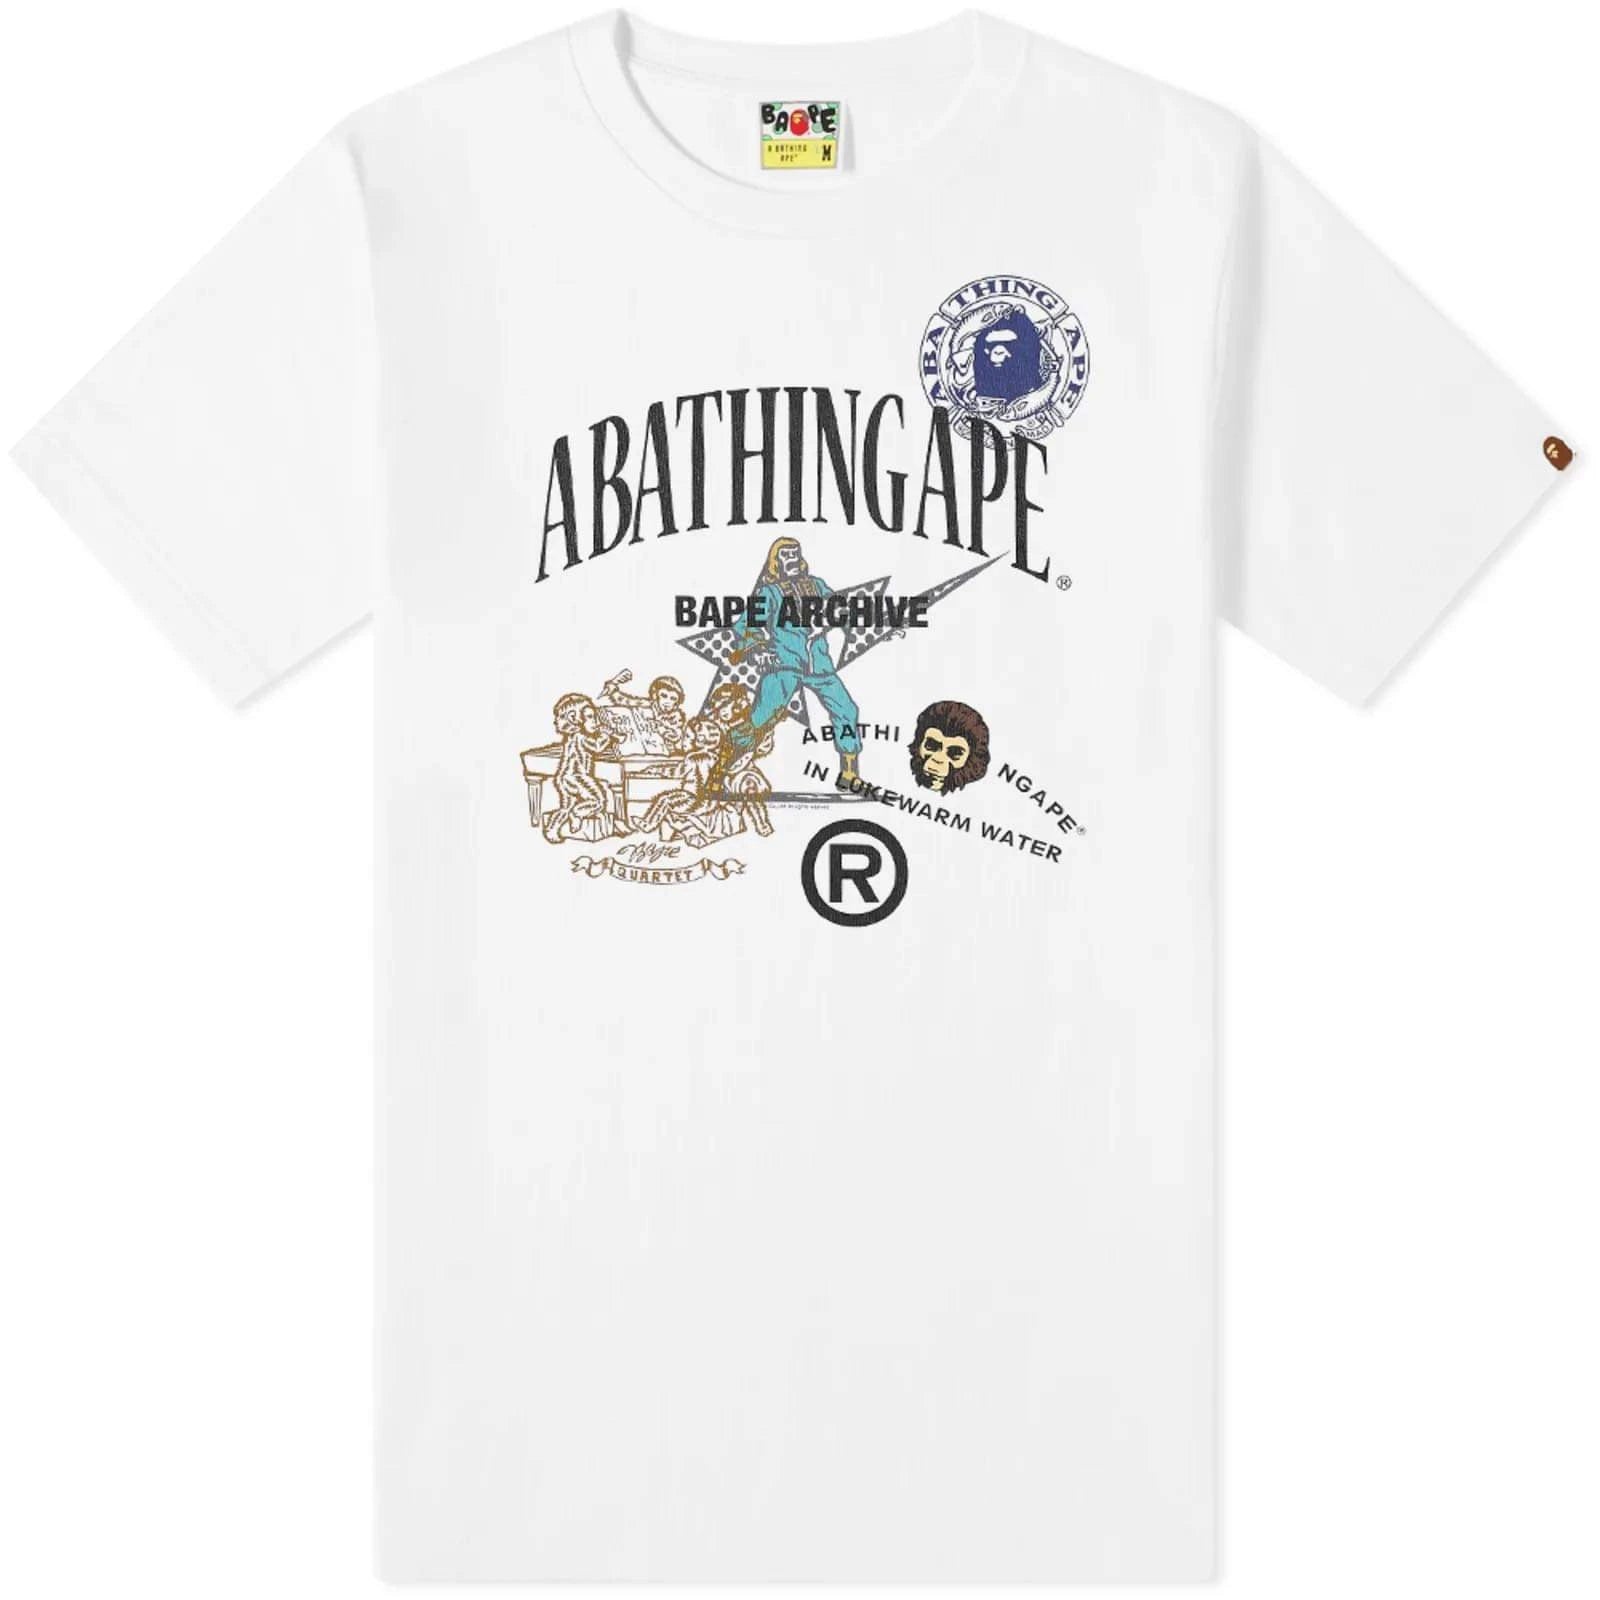 A Bathing Ape Archive Bape Multi Logo T-Shirt